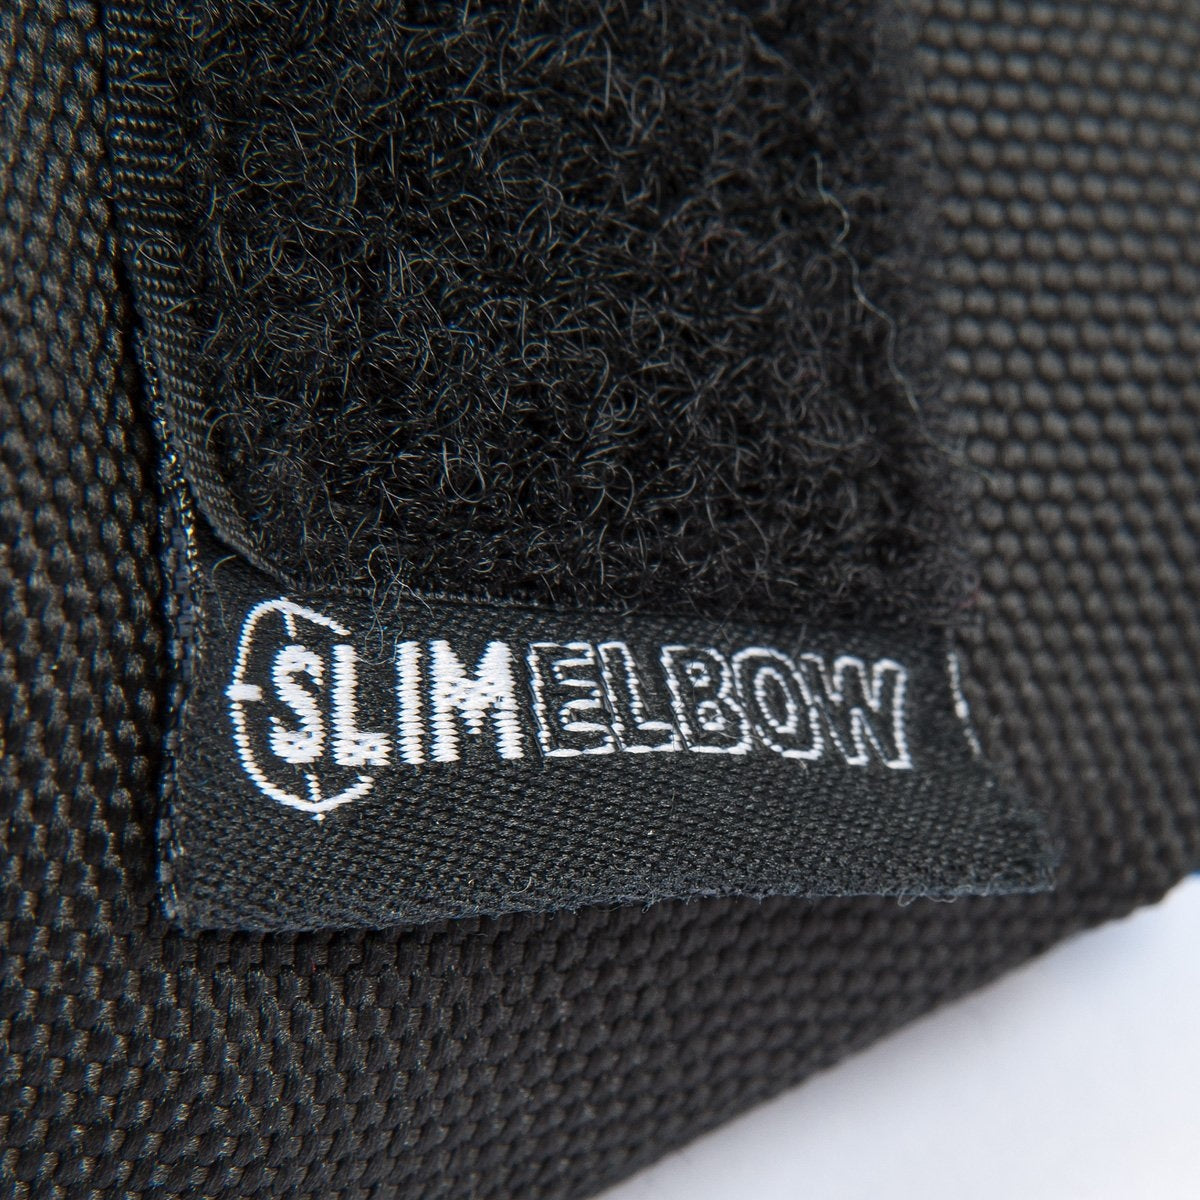 187 Killer Slim Elbow Pads Black - Safety Gear